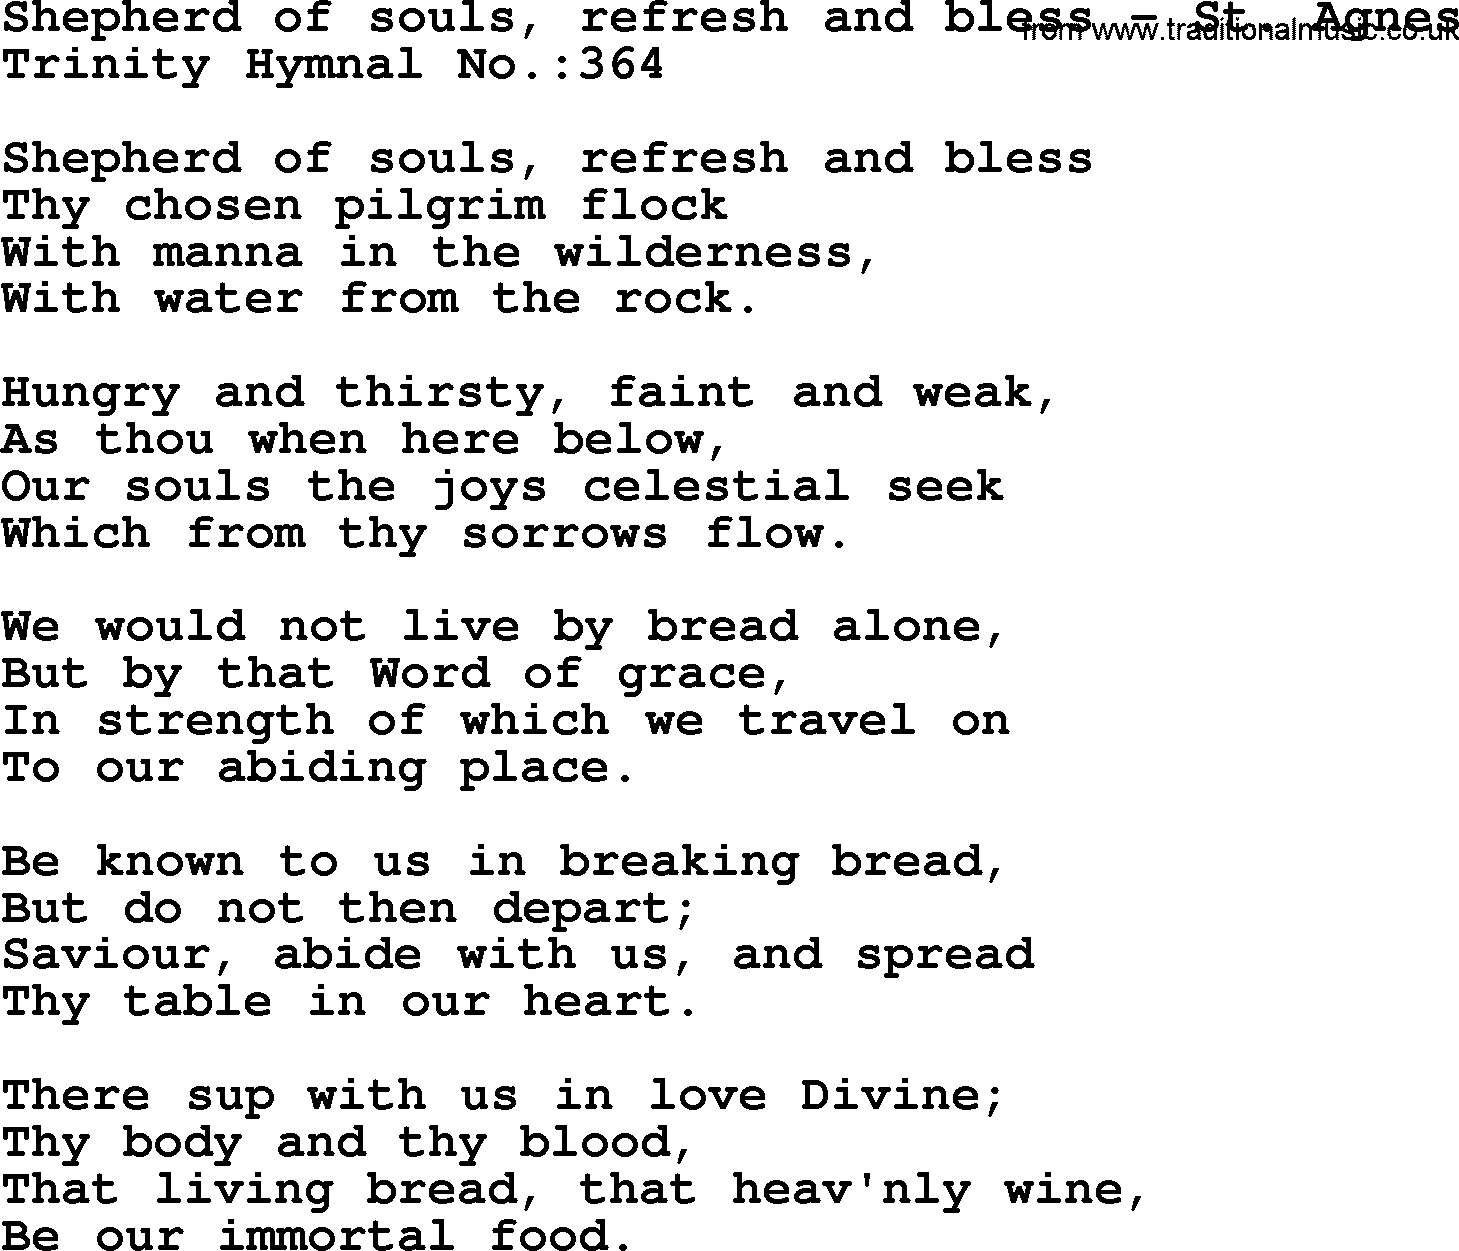 Trinity Hymnal Hymn: Shepherd Of Souls, Refresh And Bless--St. Agnes, lyrics with midi music